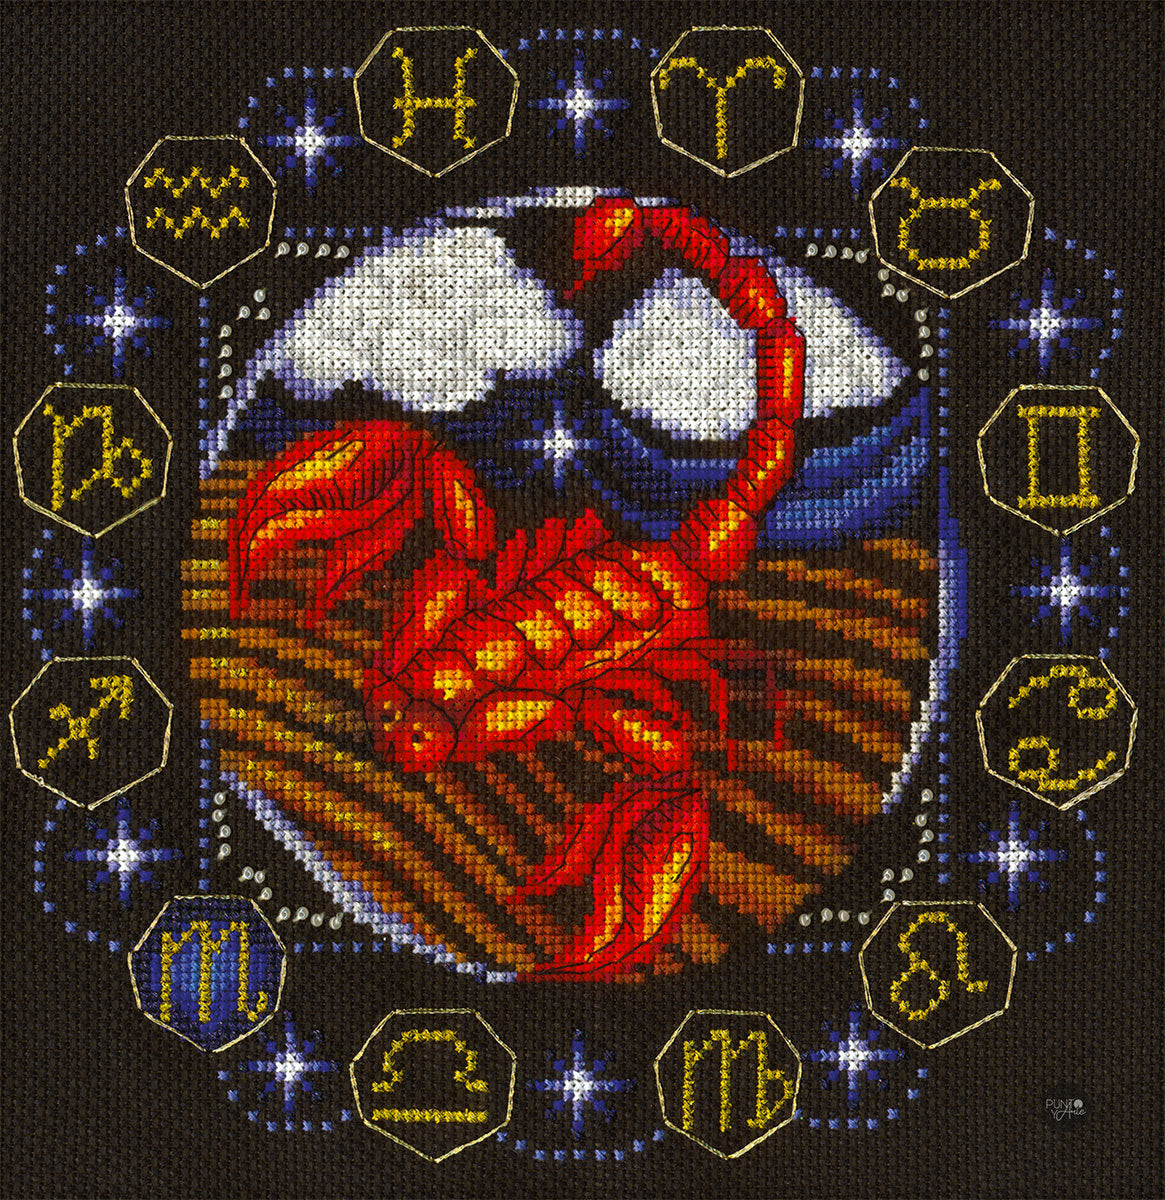 Signs of the zodiac. Scorpion - Panna ZN-0929 - Cross stitch kit